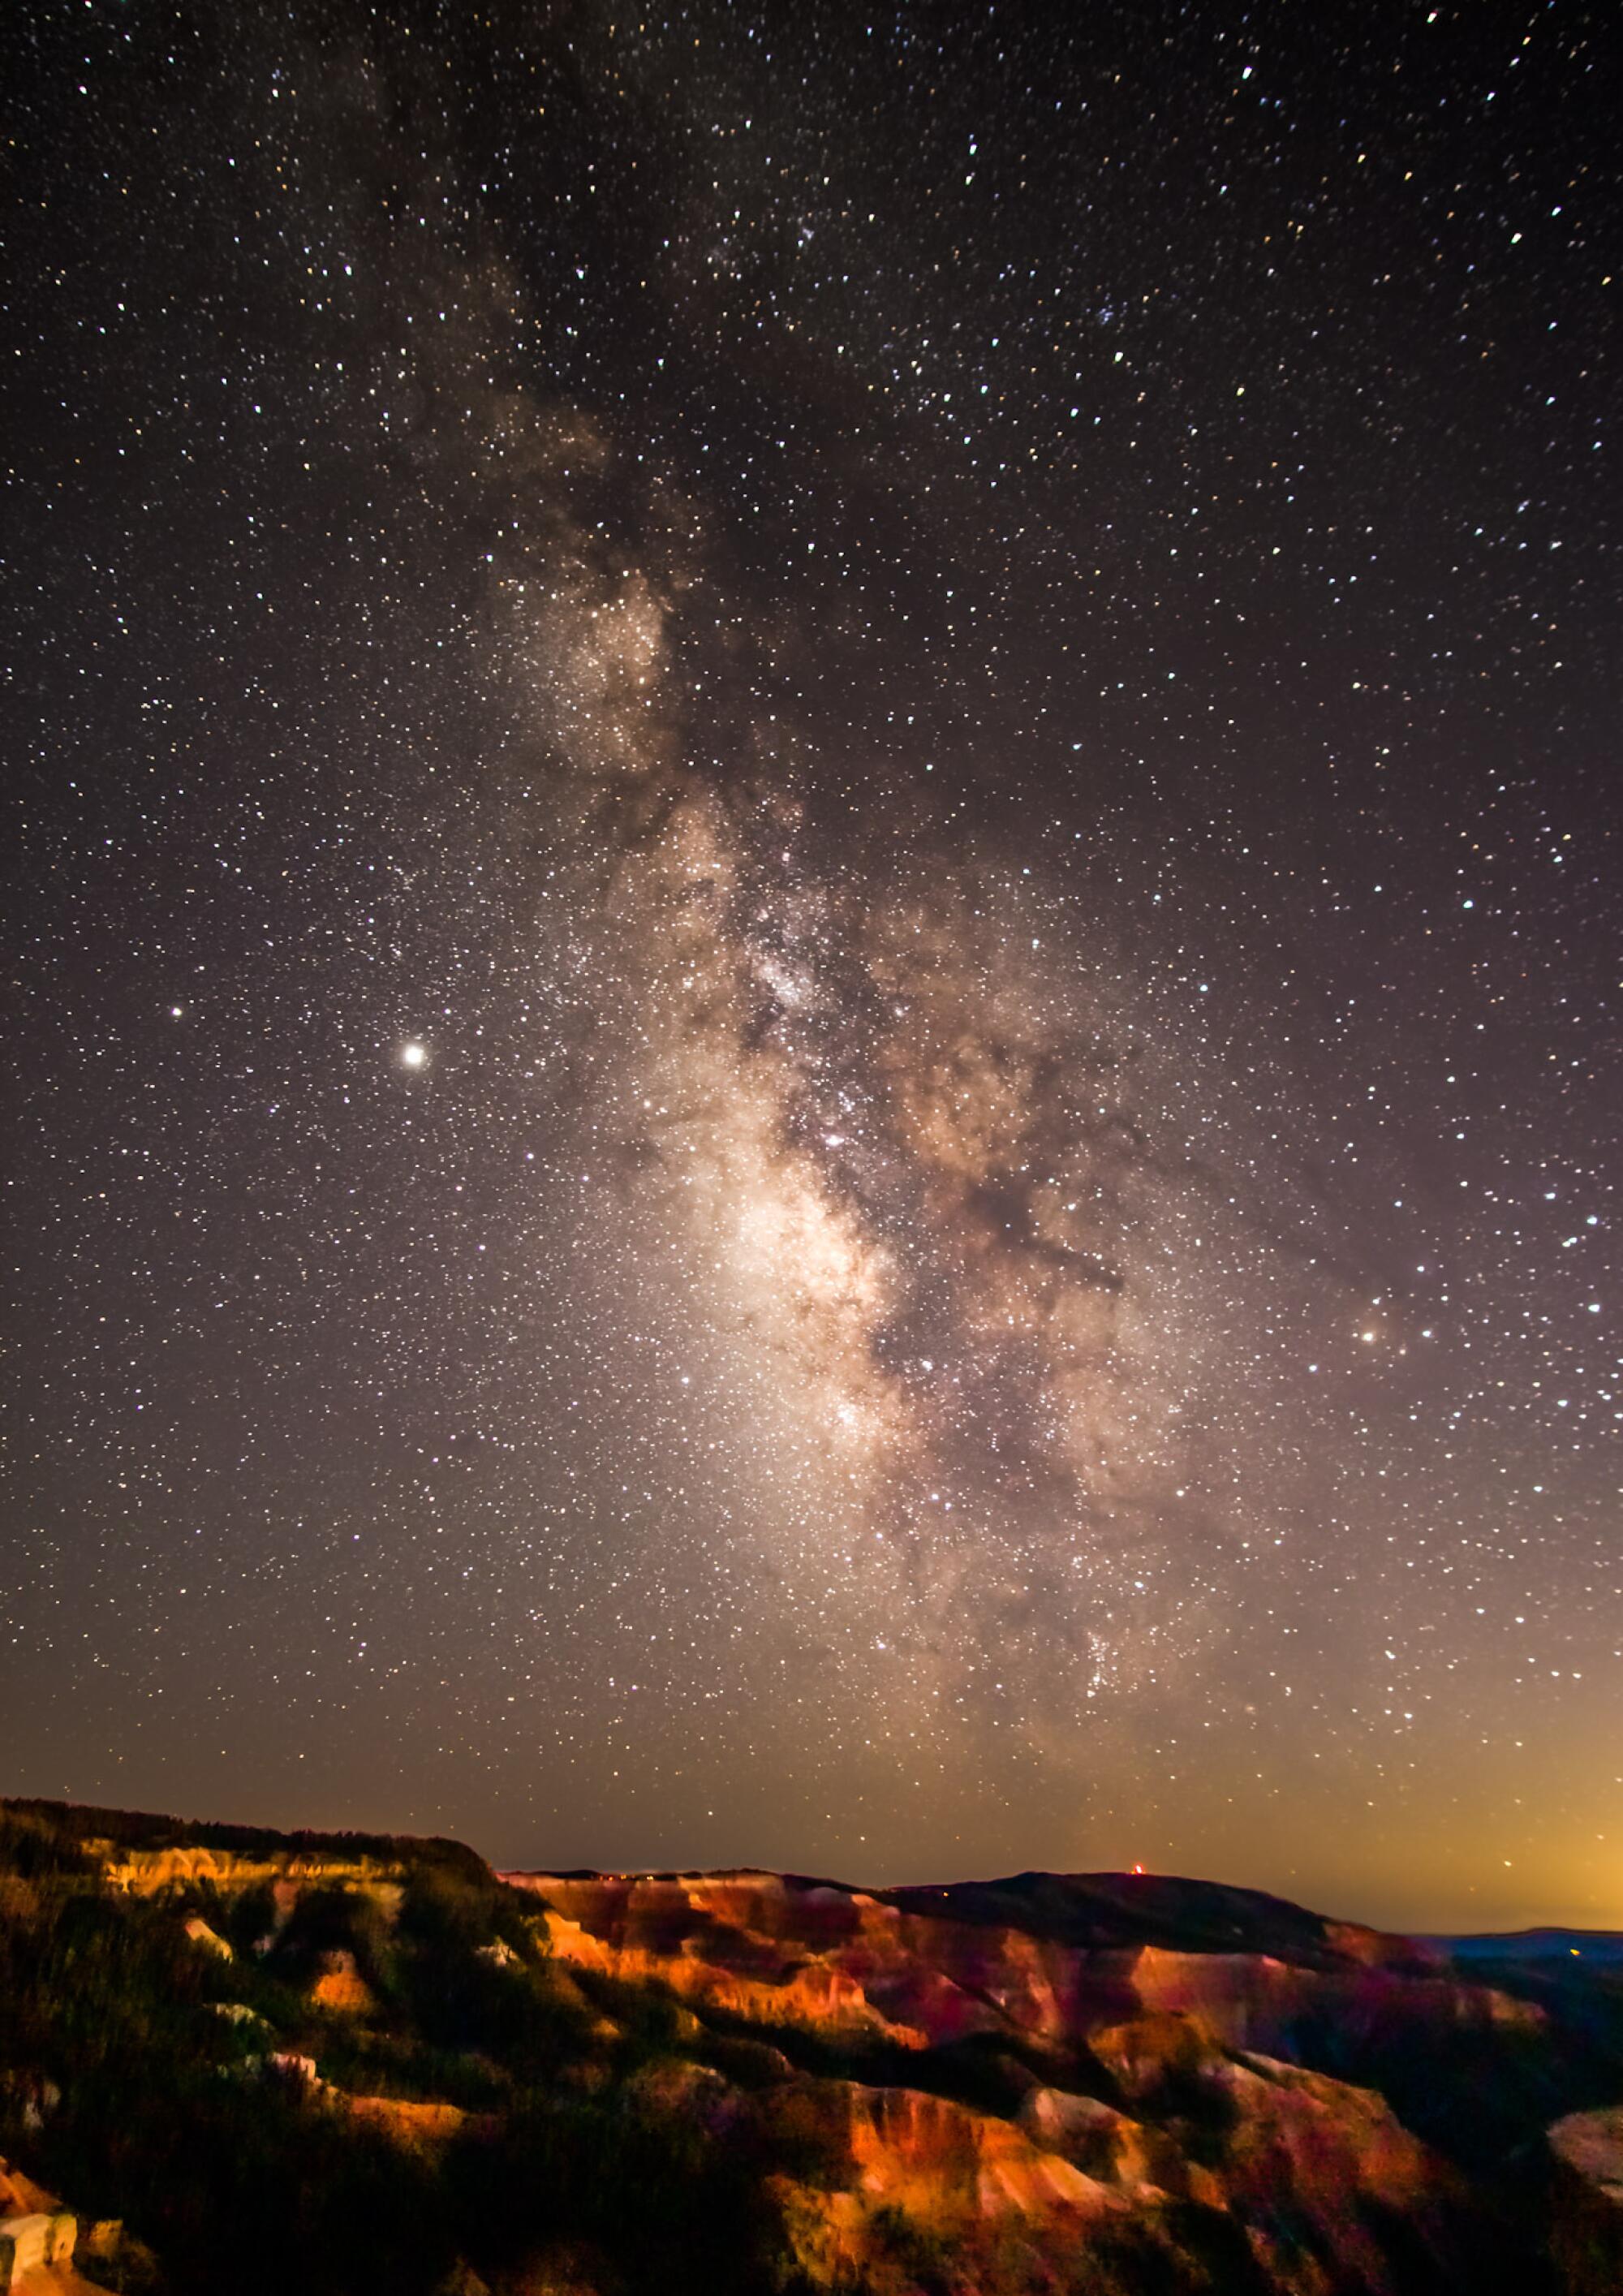 The Milky Way can be seen in exquisite detail in the dark skies over Cedar Breaks National Monument in Utah.